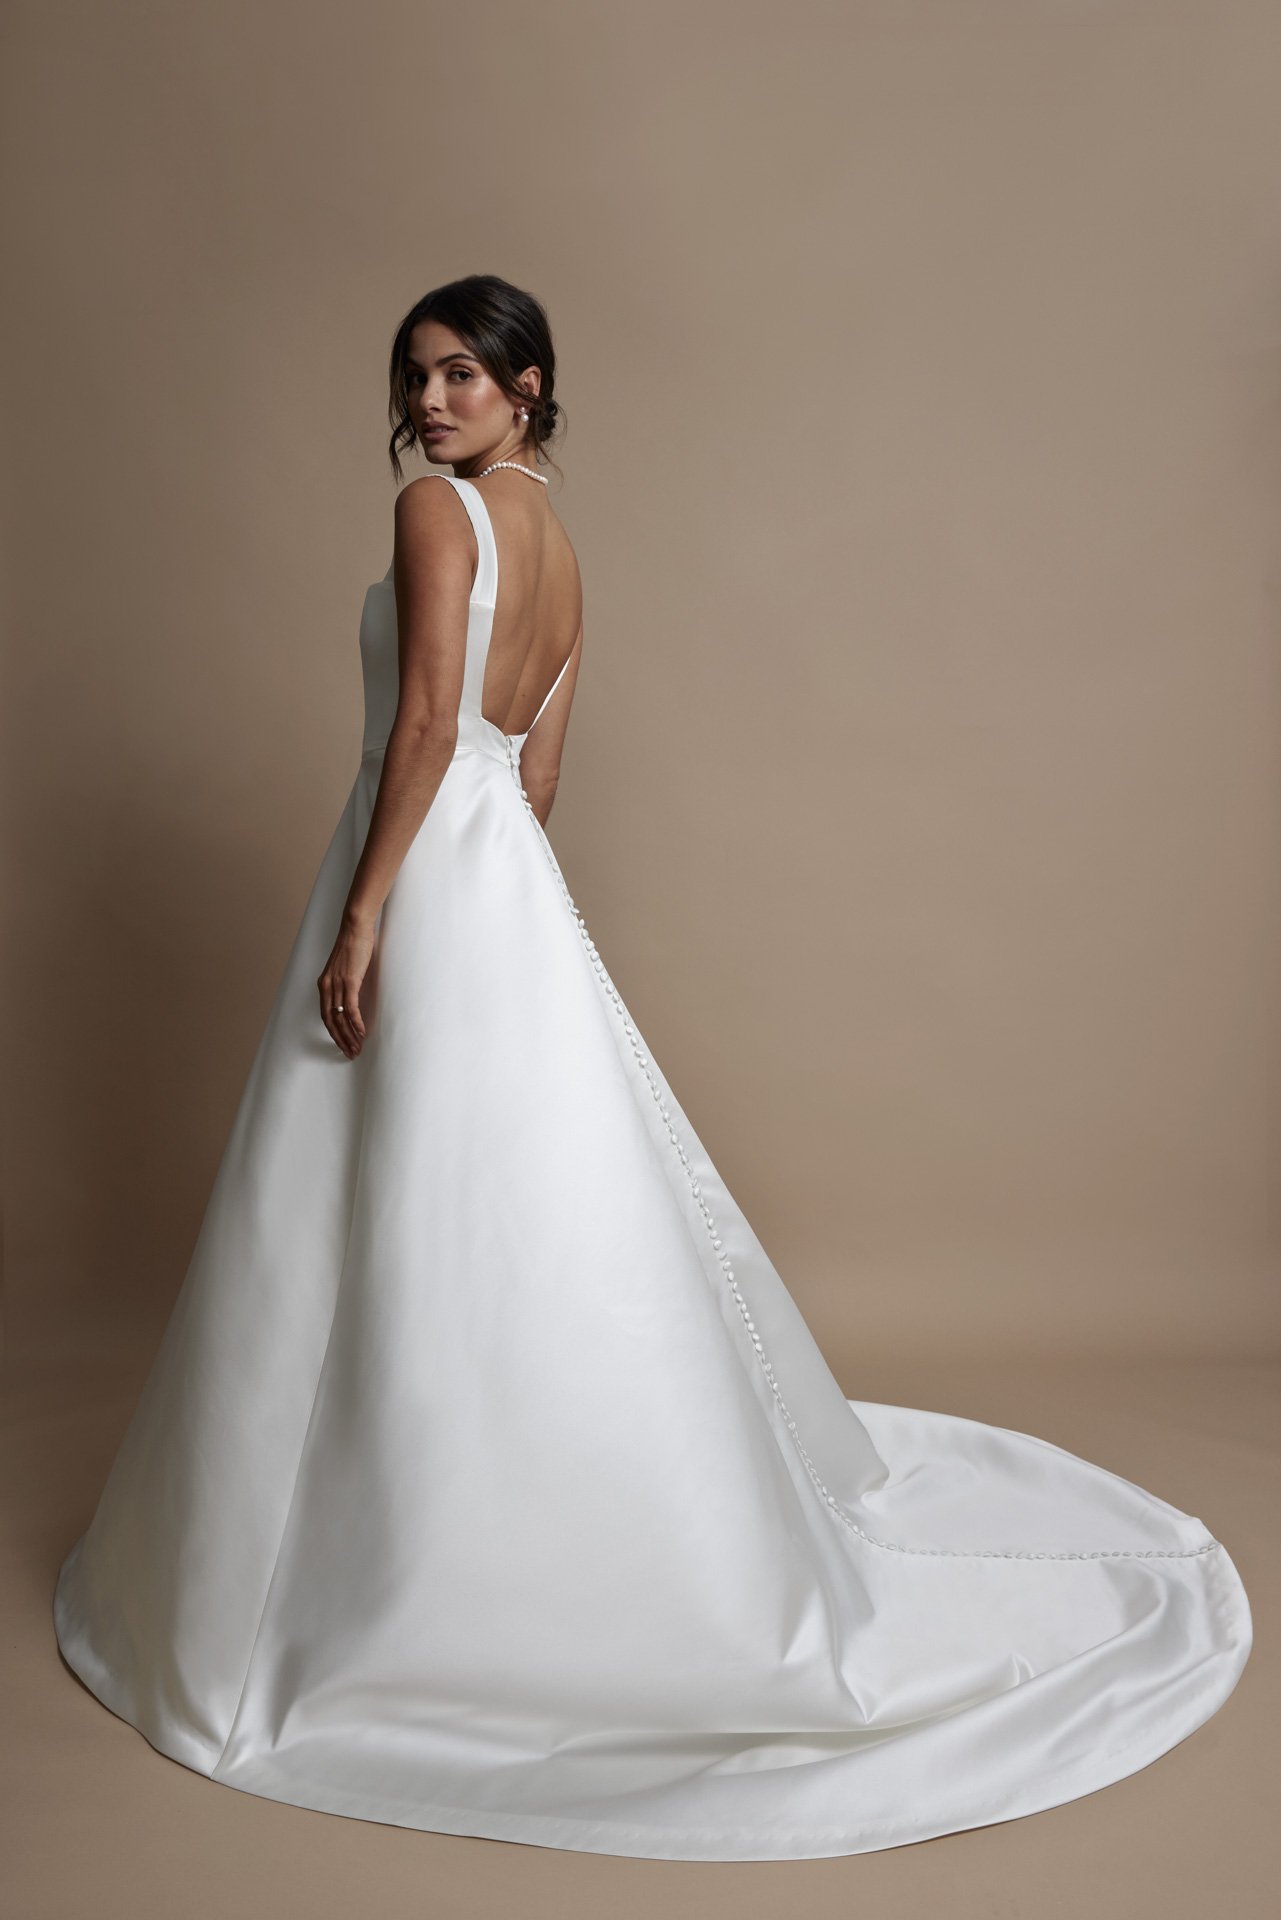 Azazie: Bridesmaid Dresses & Wedding Dresses Starting at $79